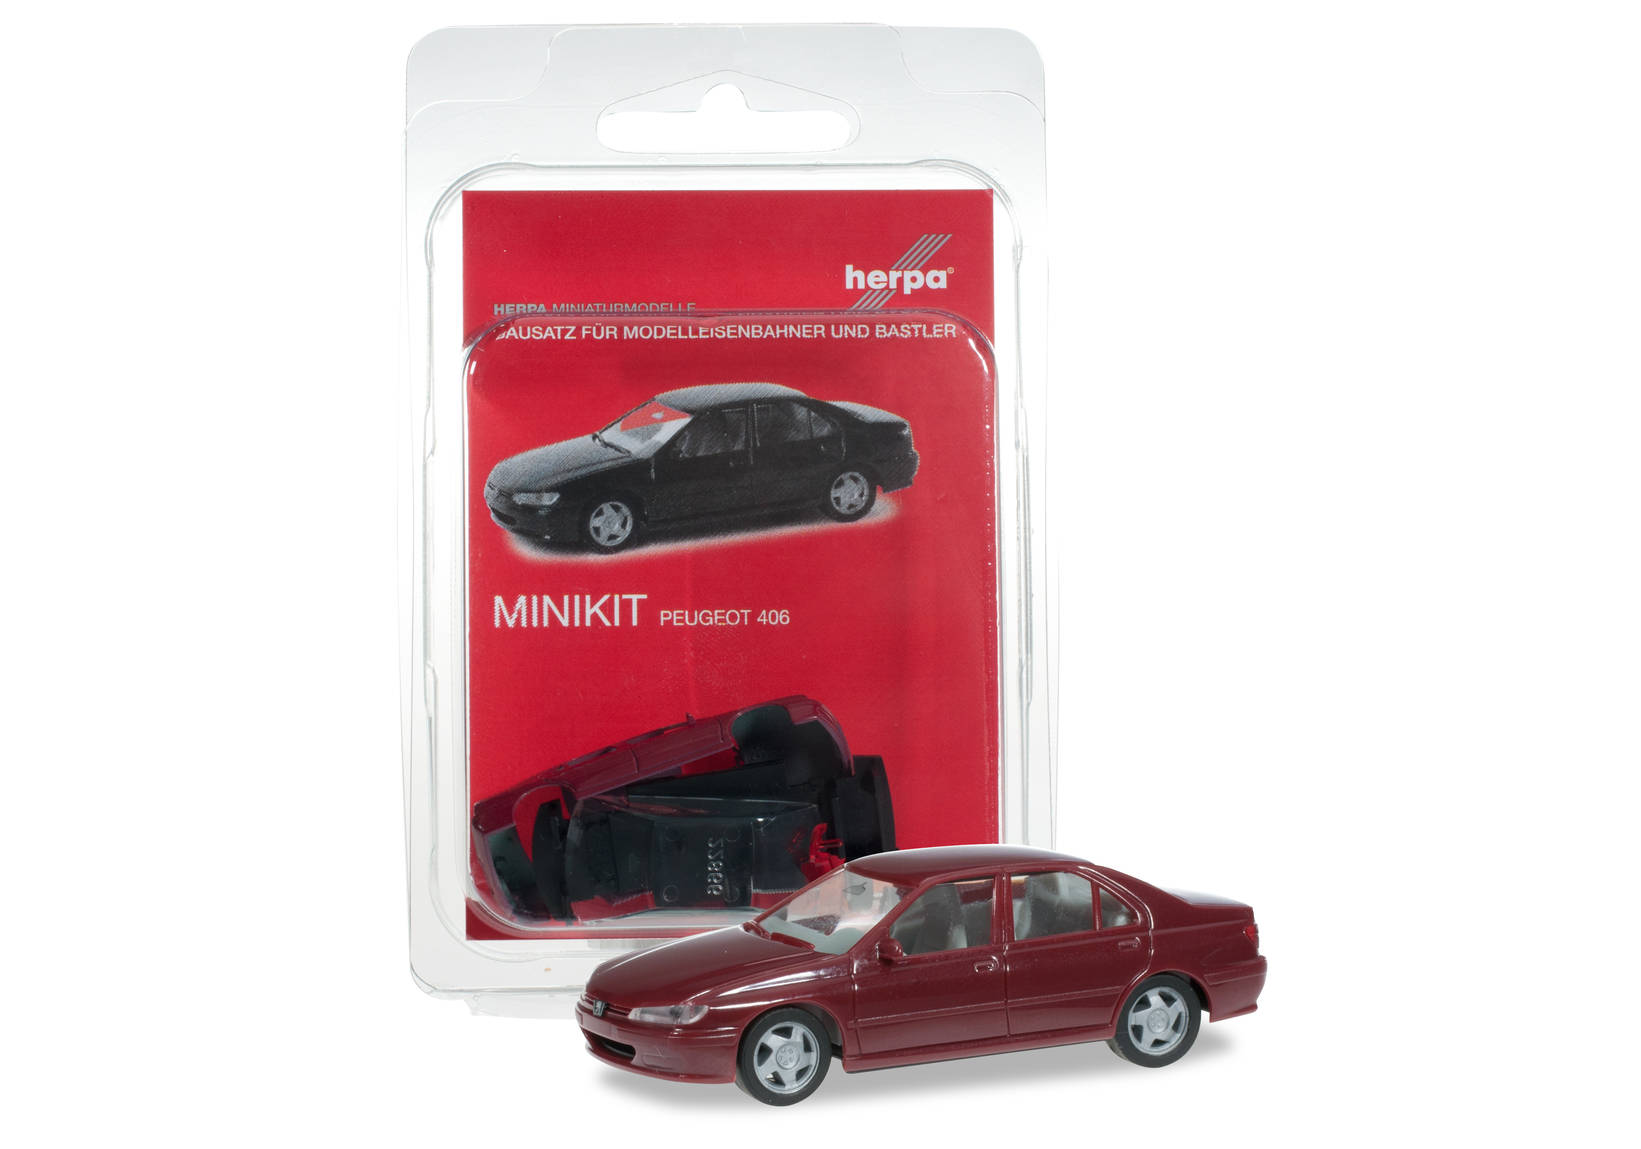 Herpa MiniKit: Peugeot 406, wine red